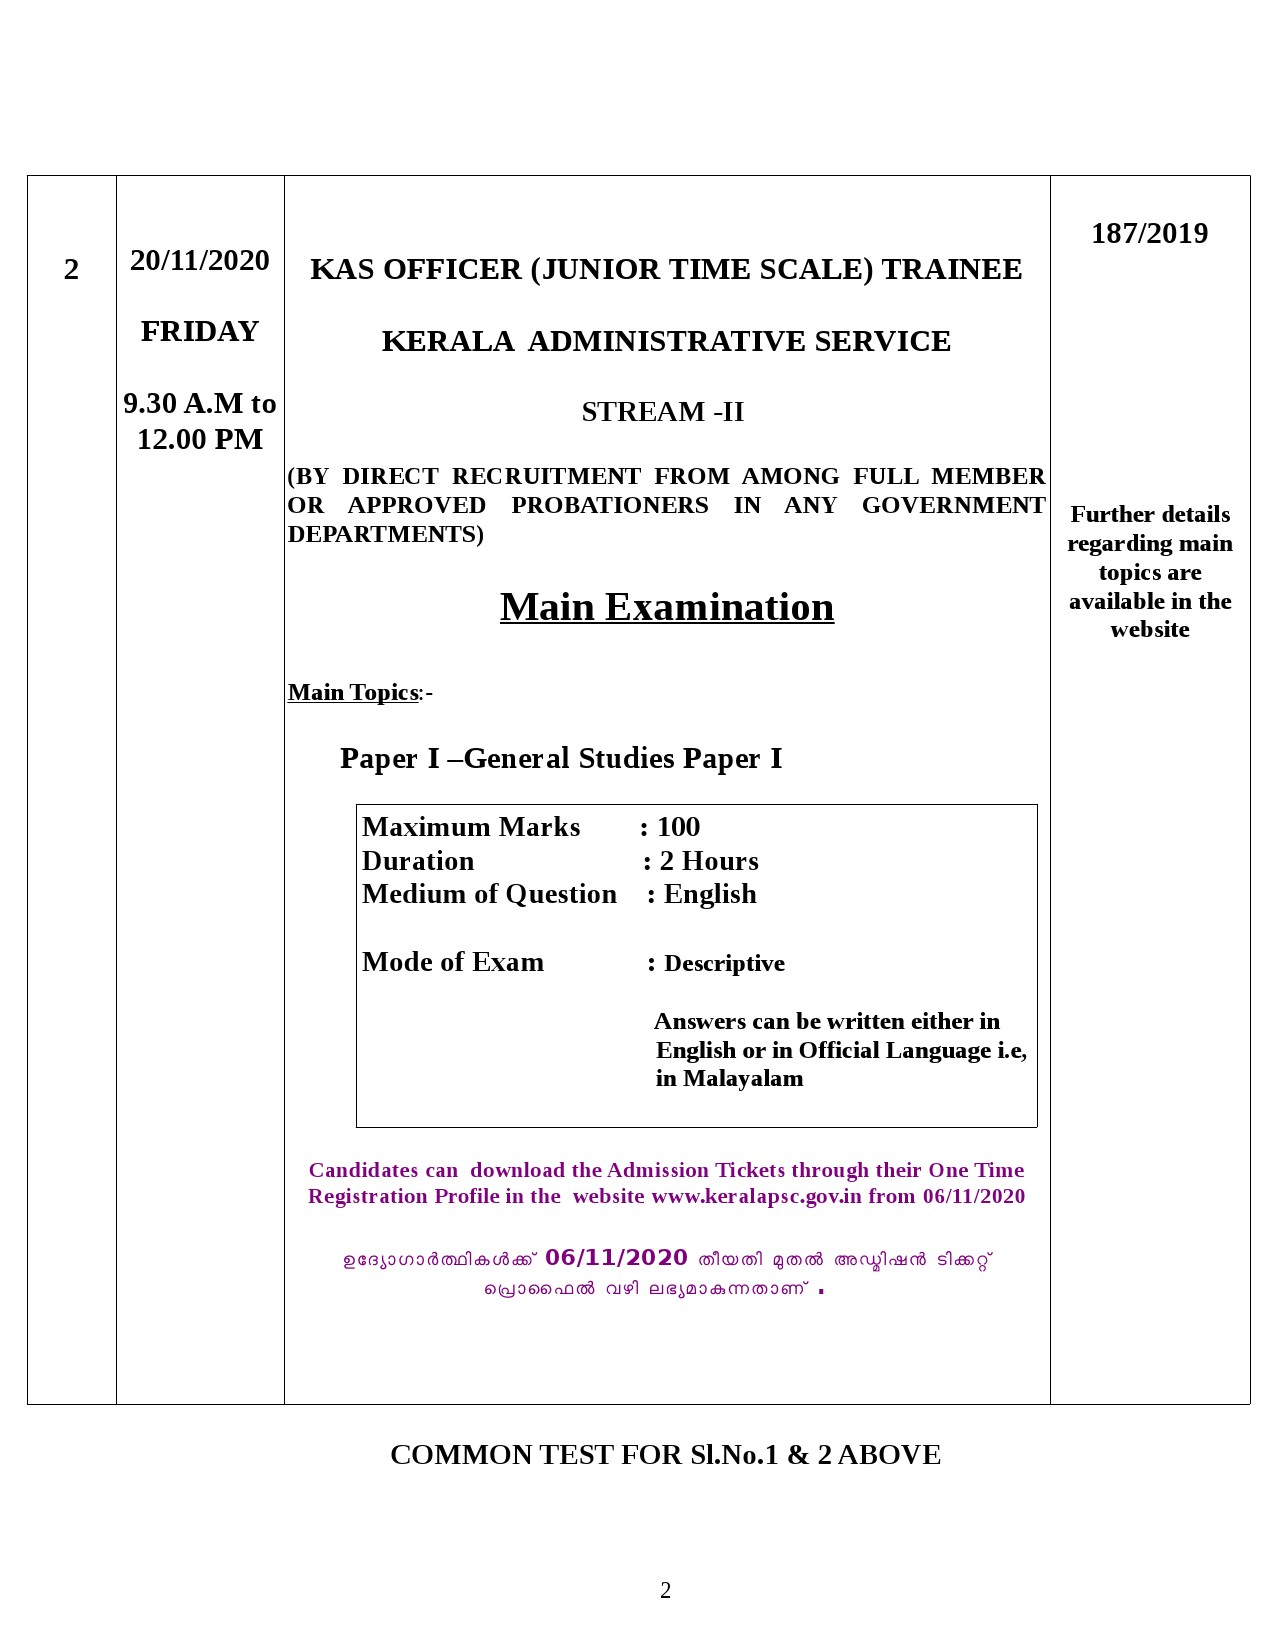 Kerala PSC Additional Exam for November 2020 - Notification Image 2